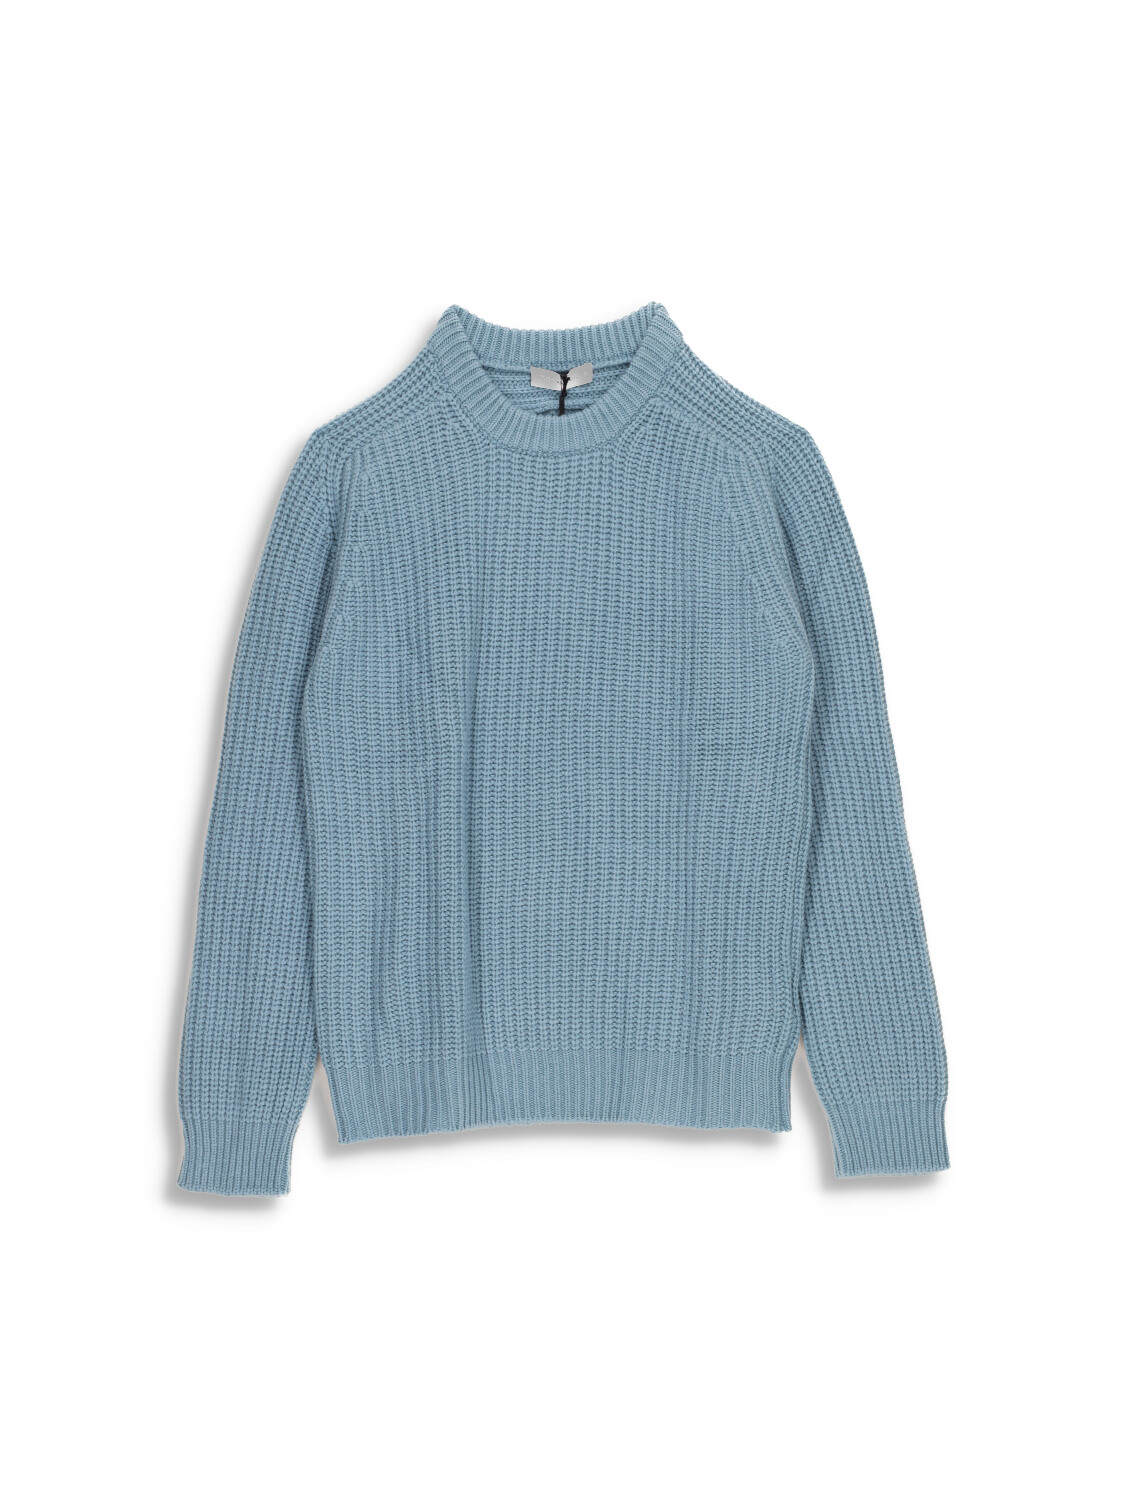 Mood Rib Sweater - Pull en maille côtelée